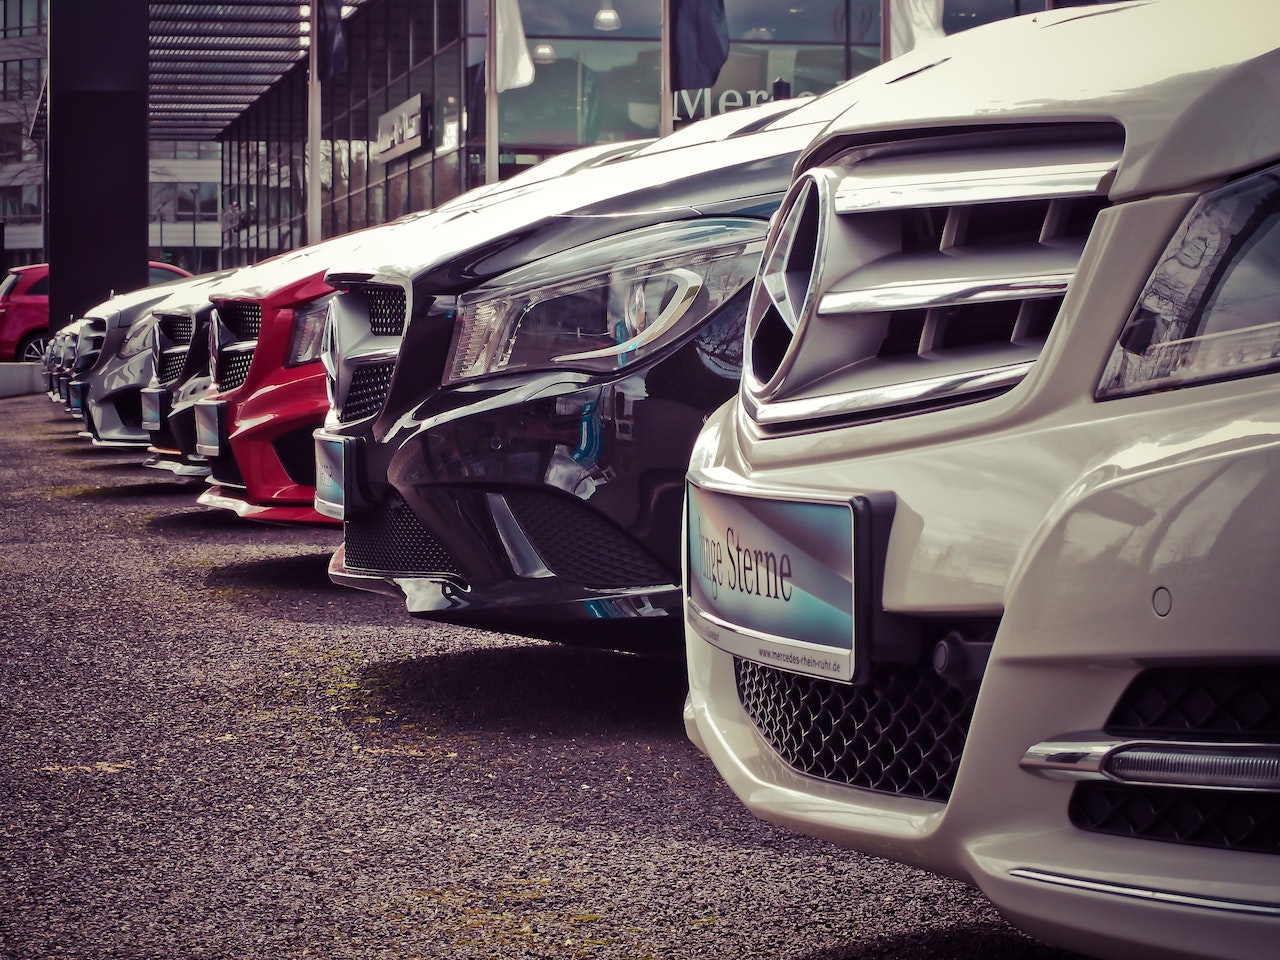 A row of luxury cars